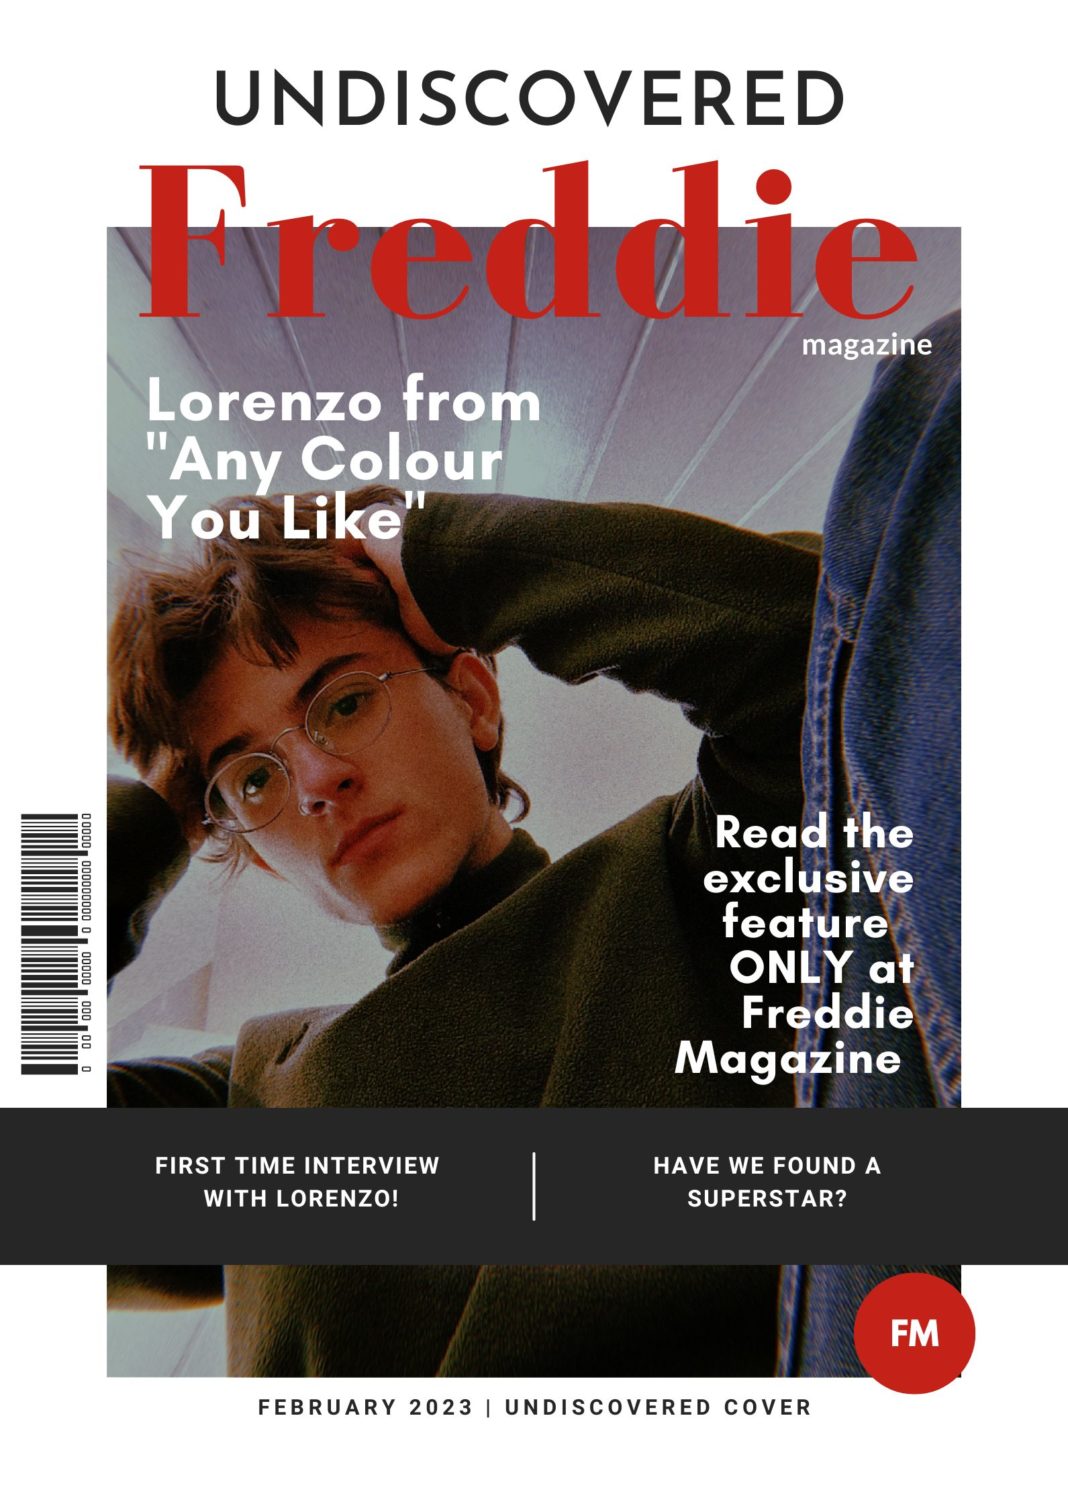 Undiscovered by Freddie Magazine - Lorenzo